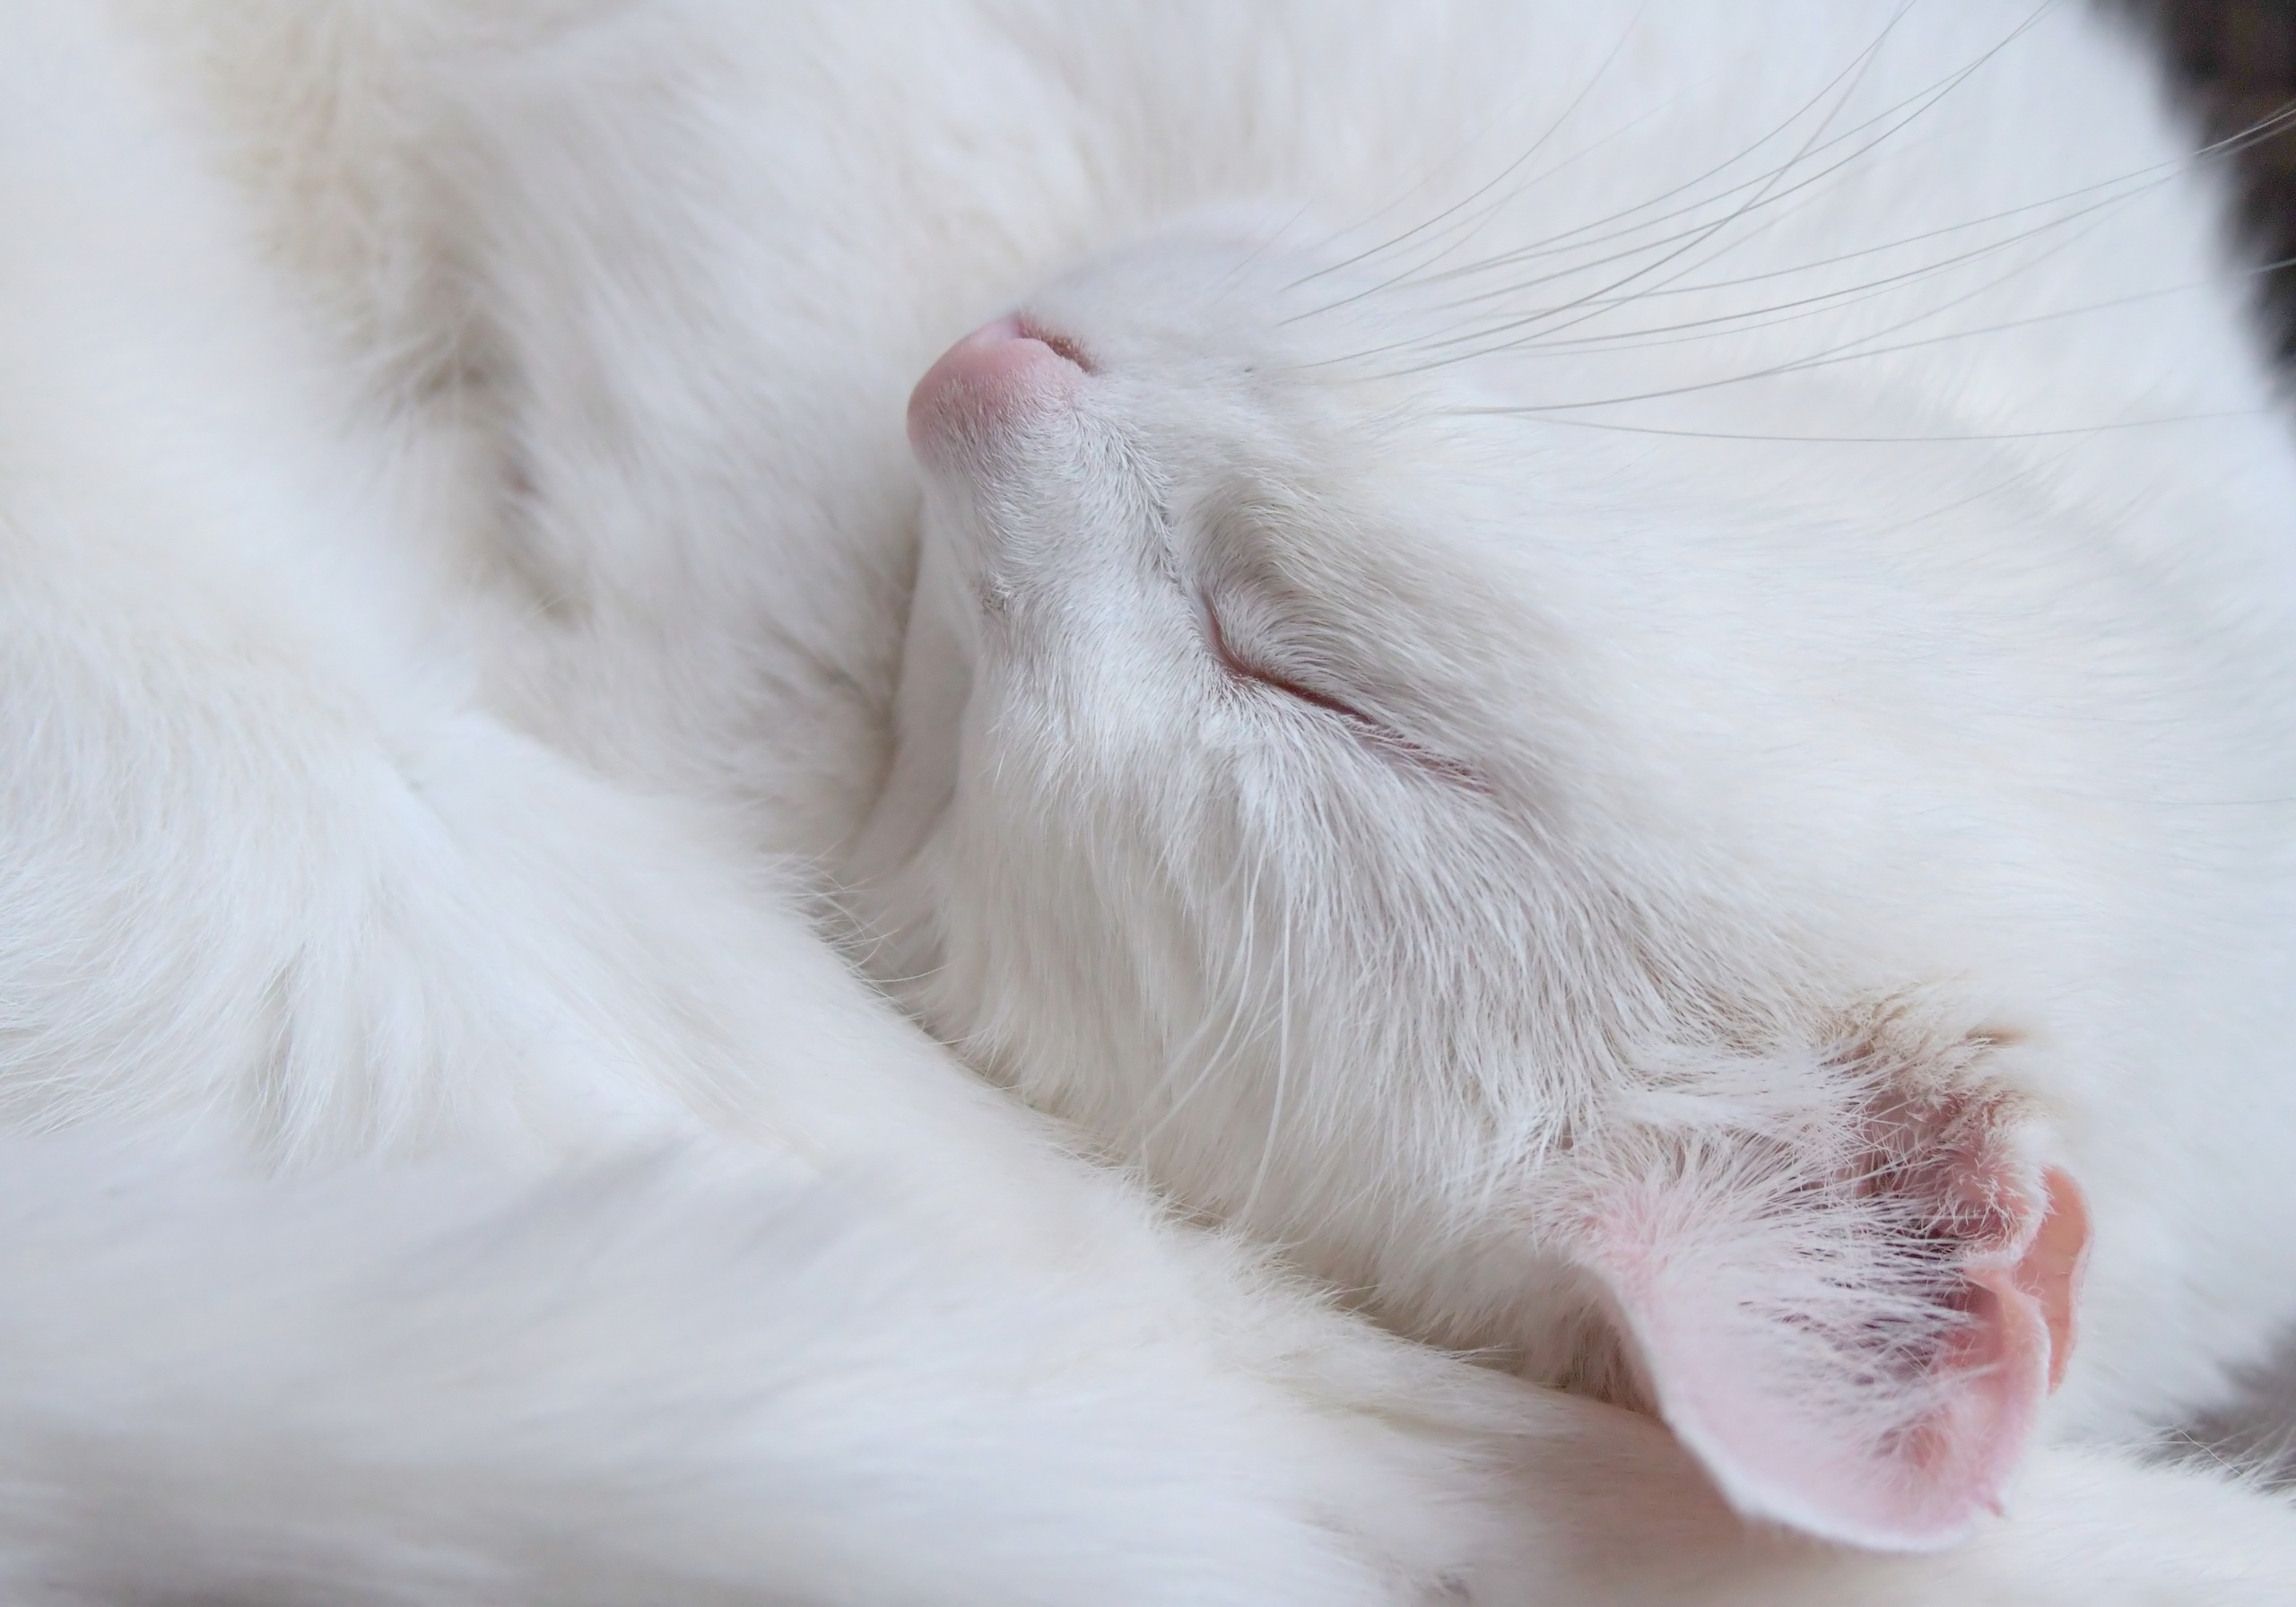 General 2560x1792 sleeping cats animals white feline mammals closeup